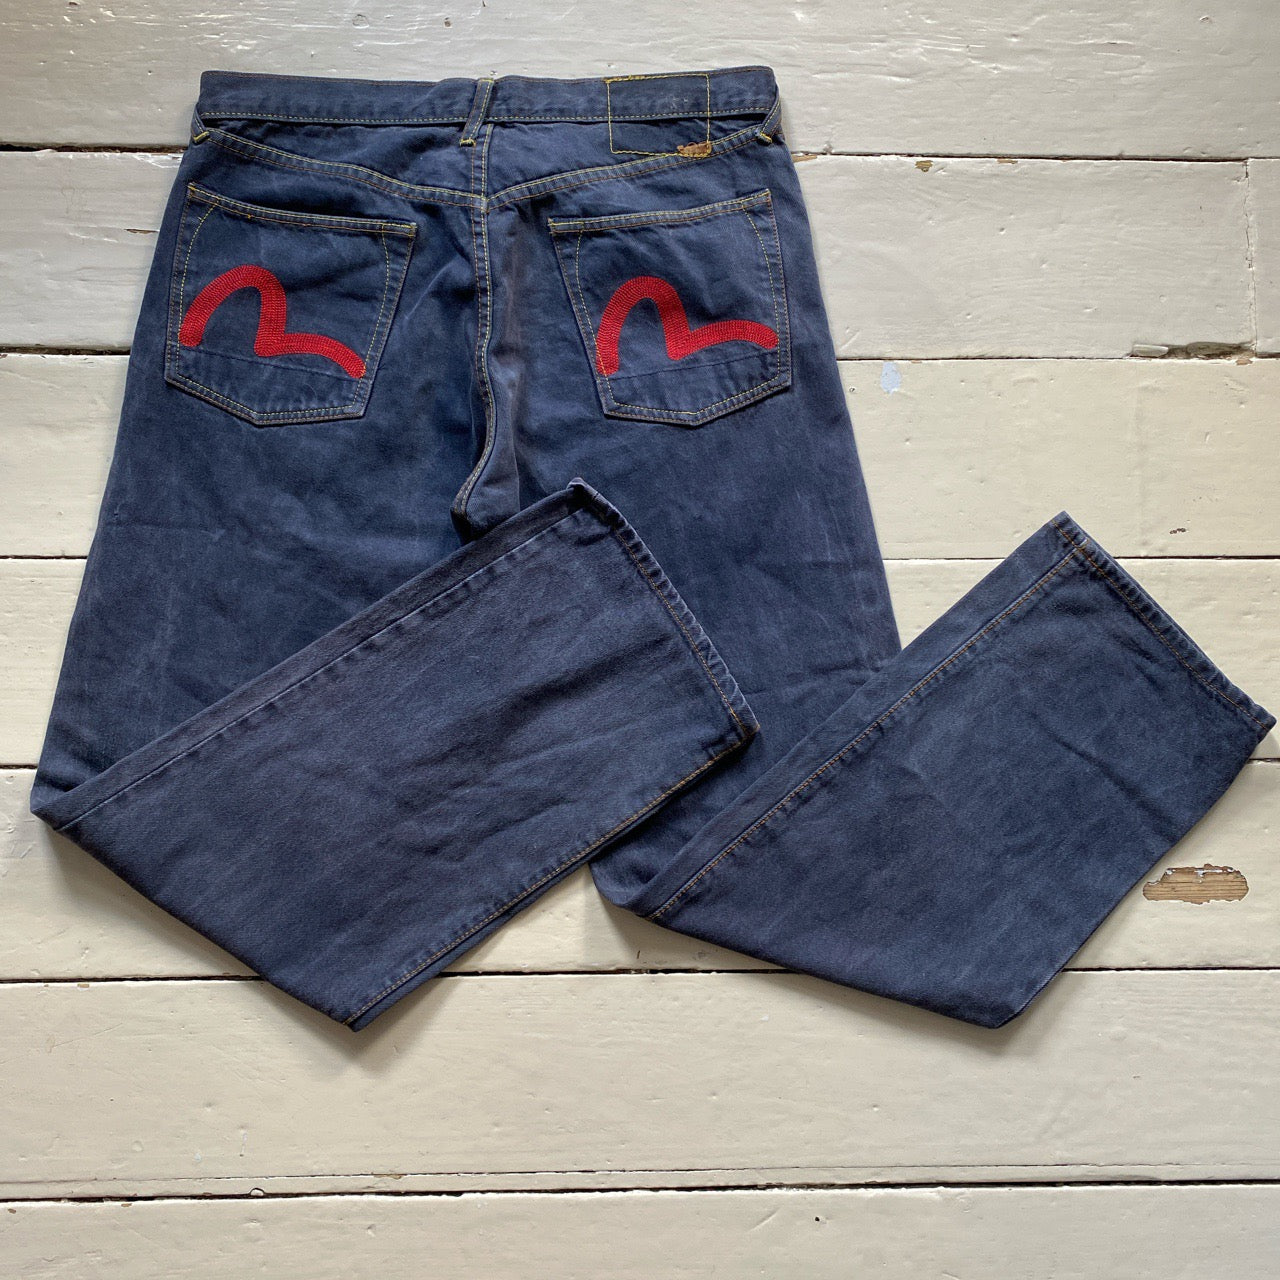 Evisu Vintage Swoosh Jeans (36/32)